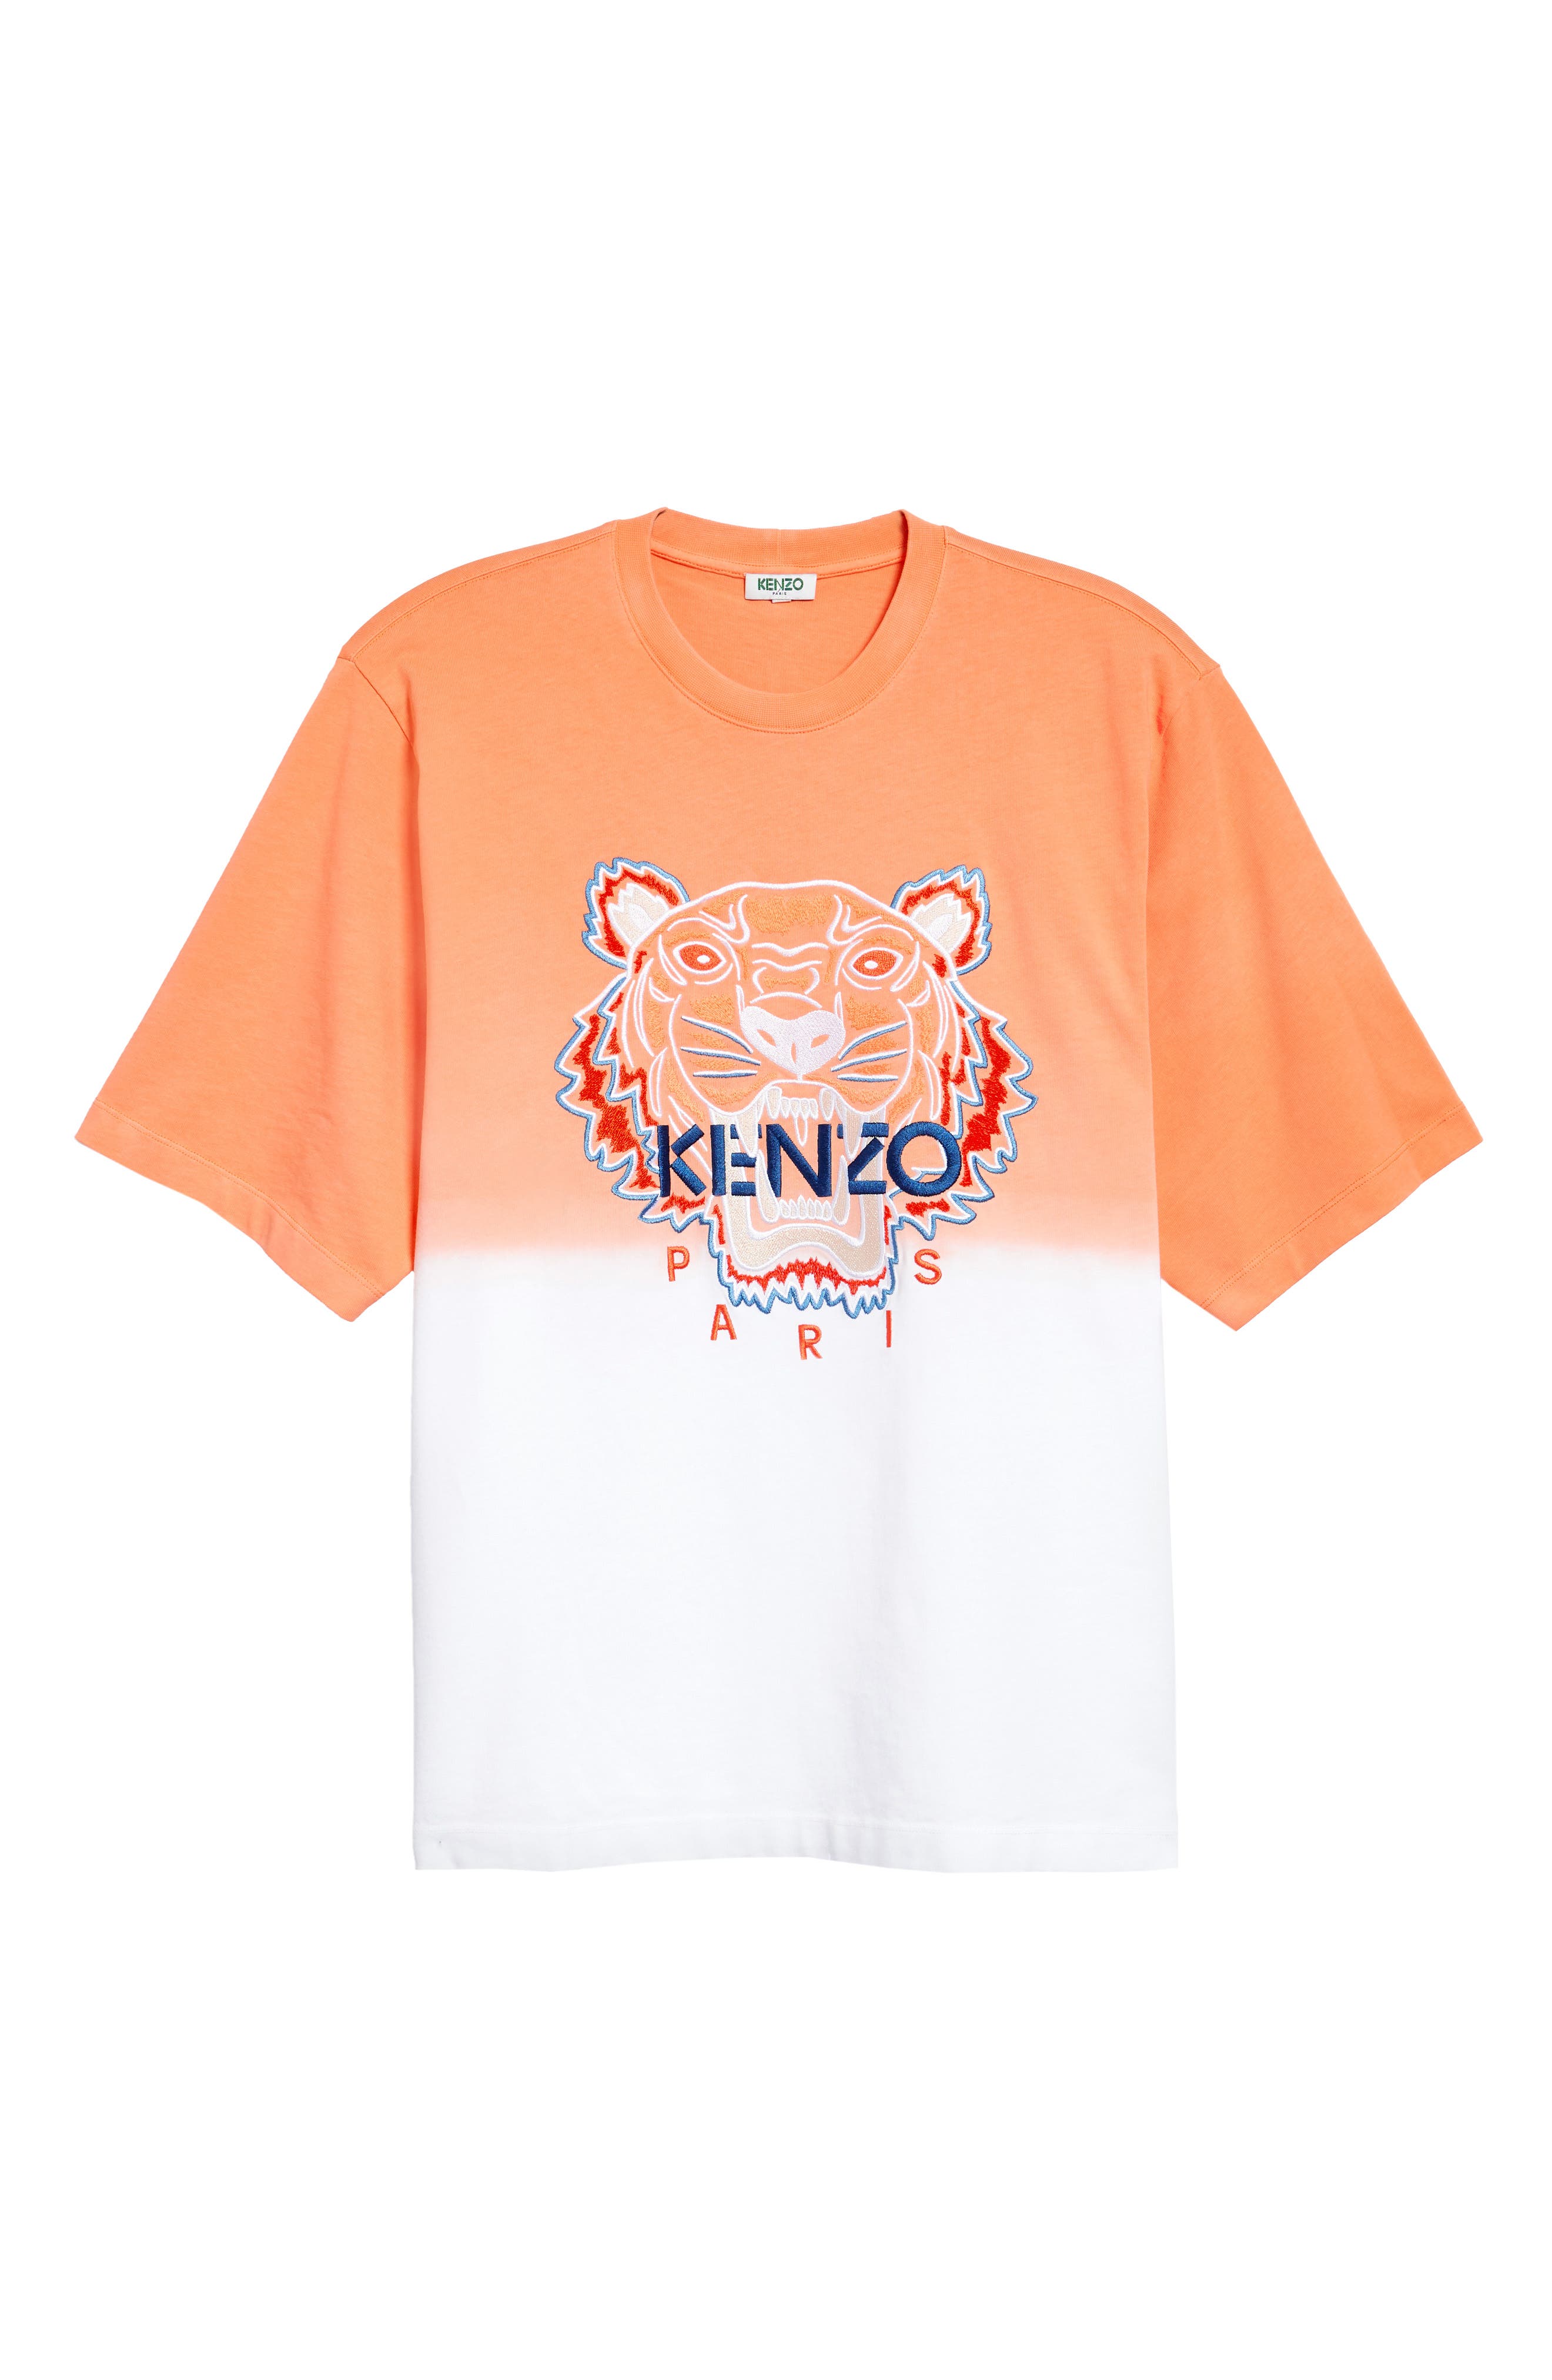 kenzo uk website